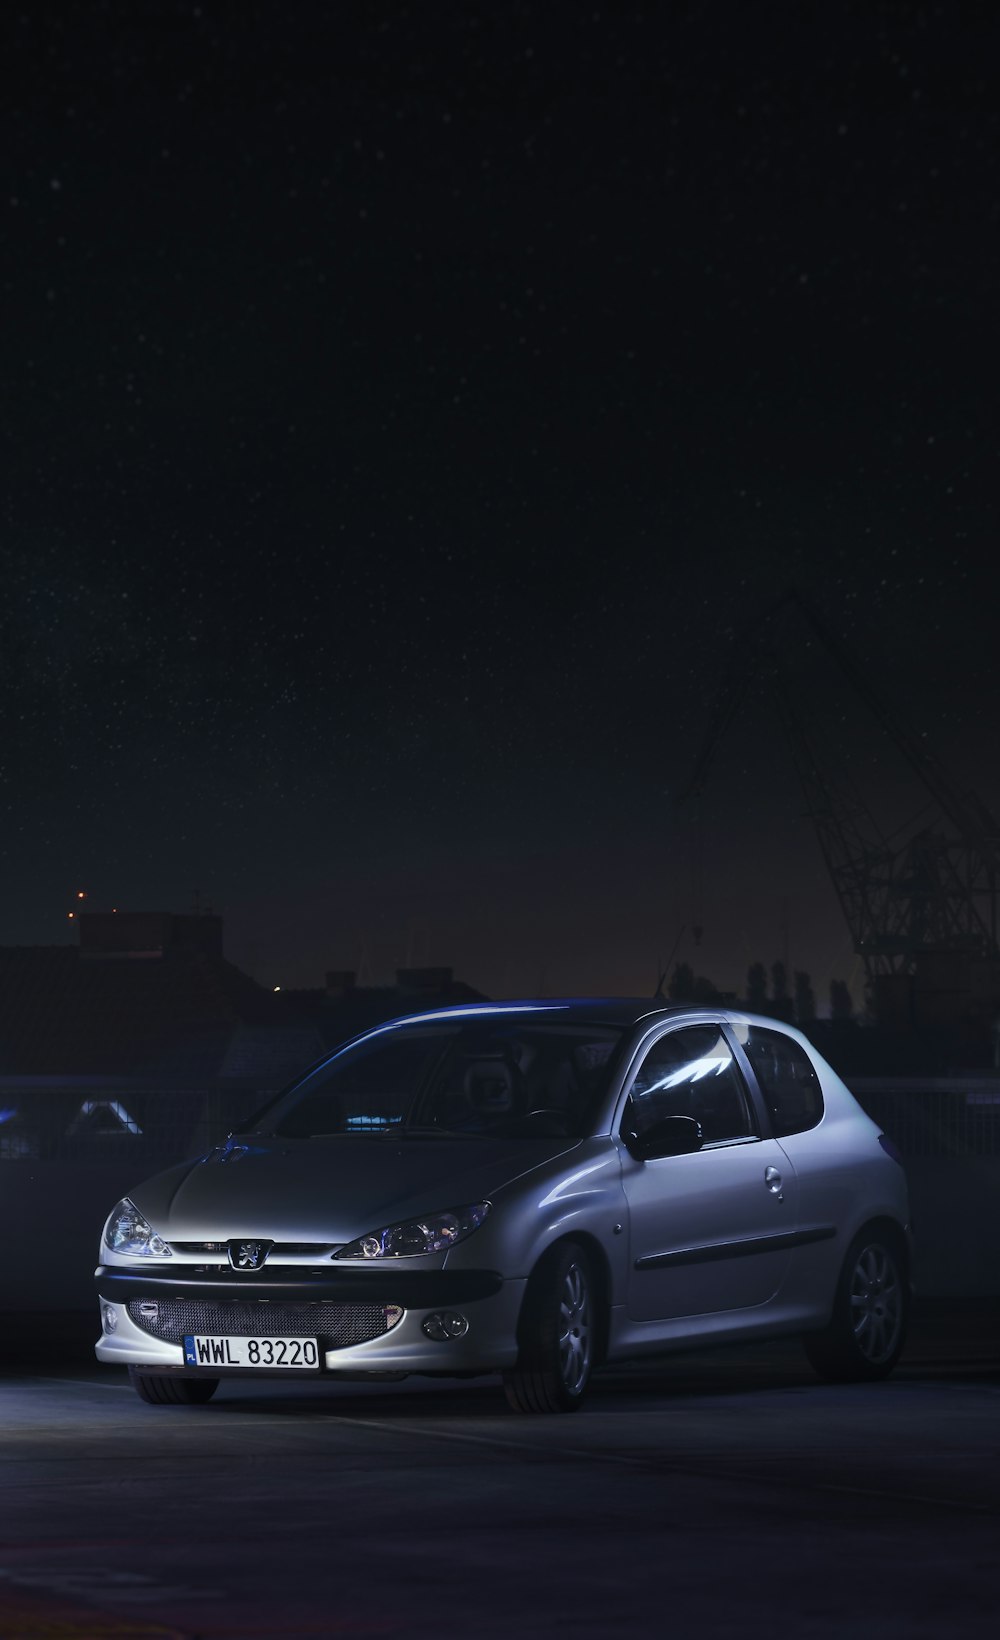 silver sedan on road during night time